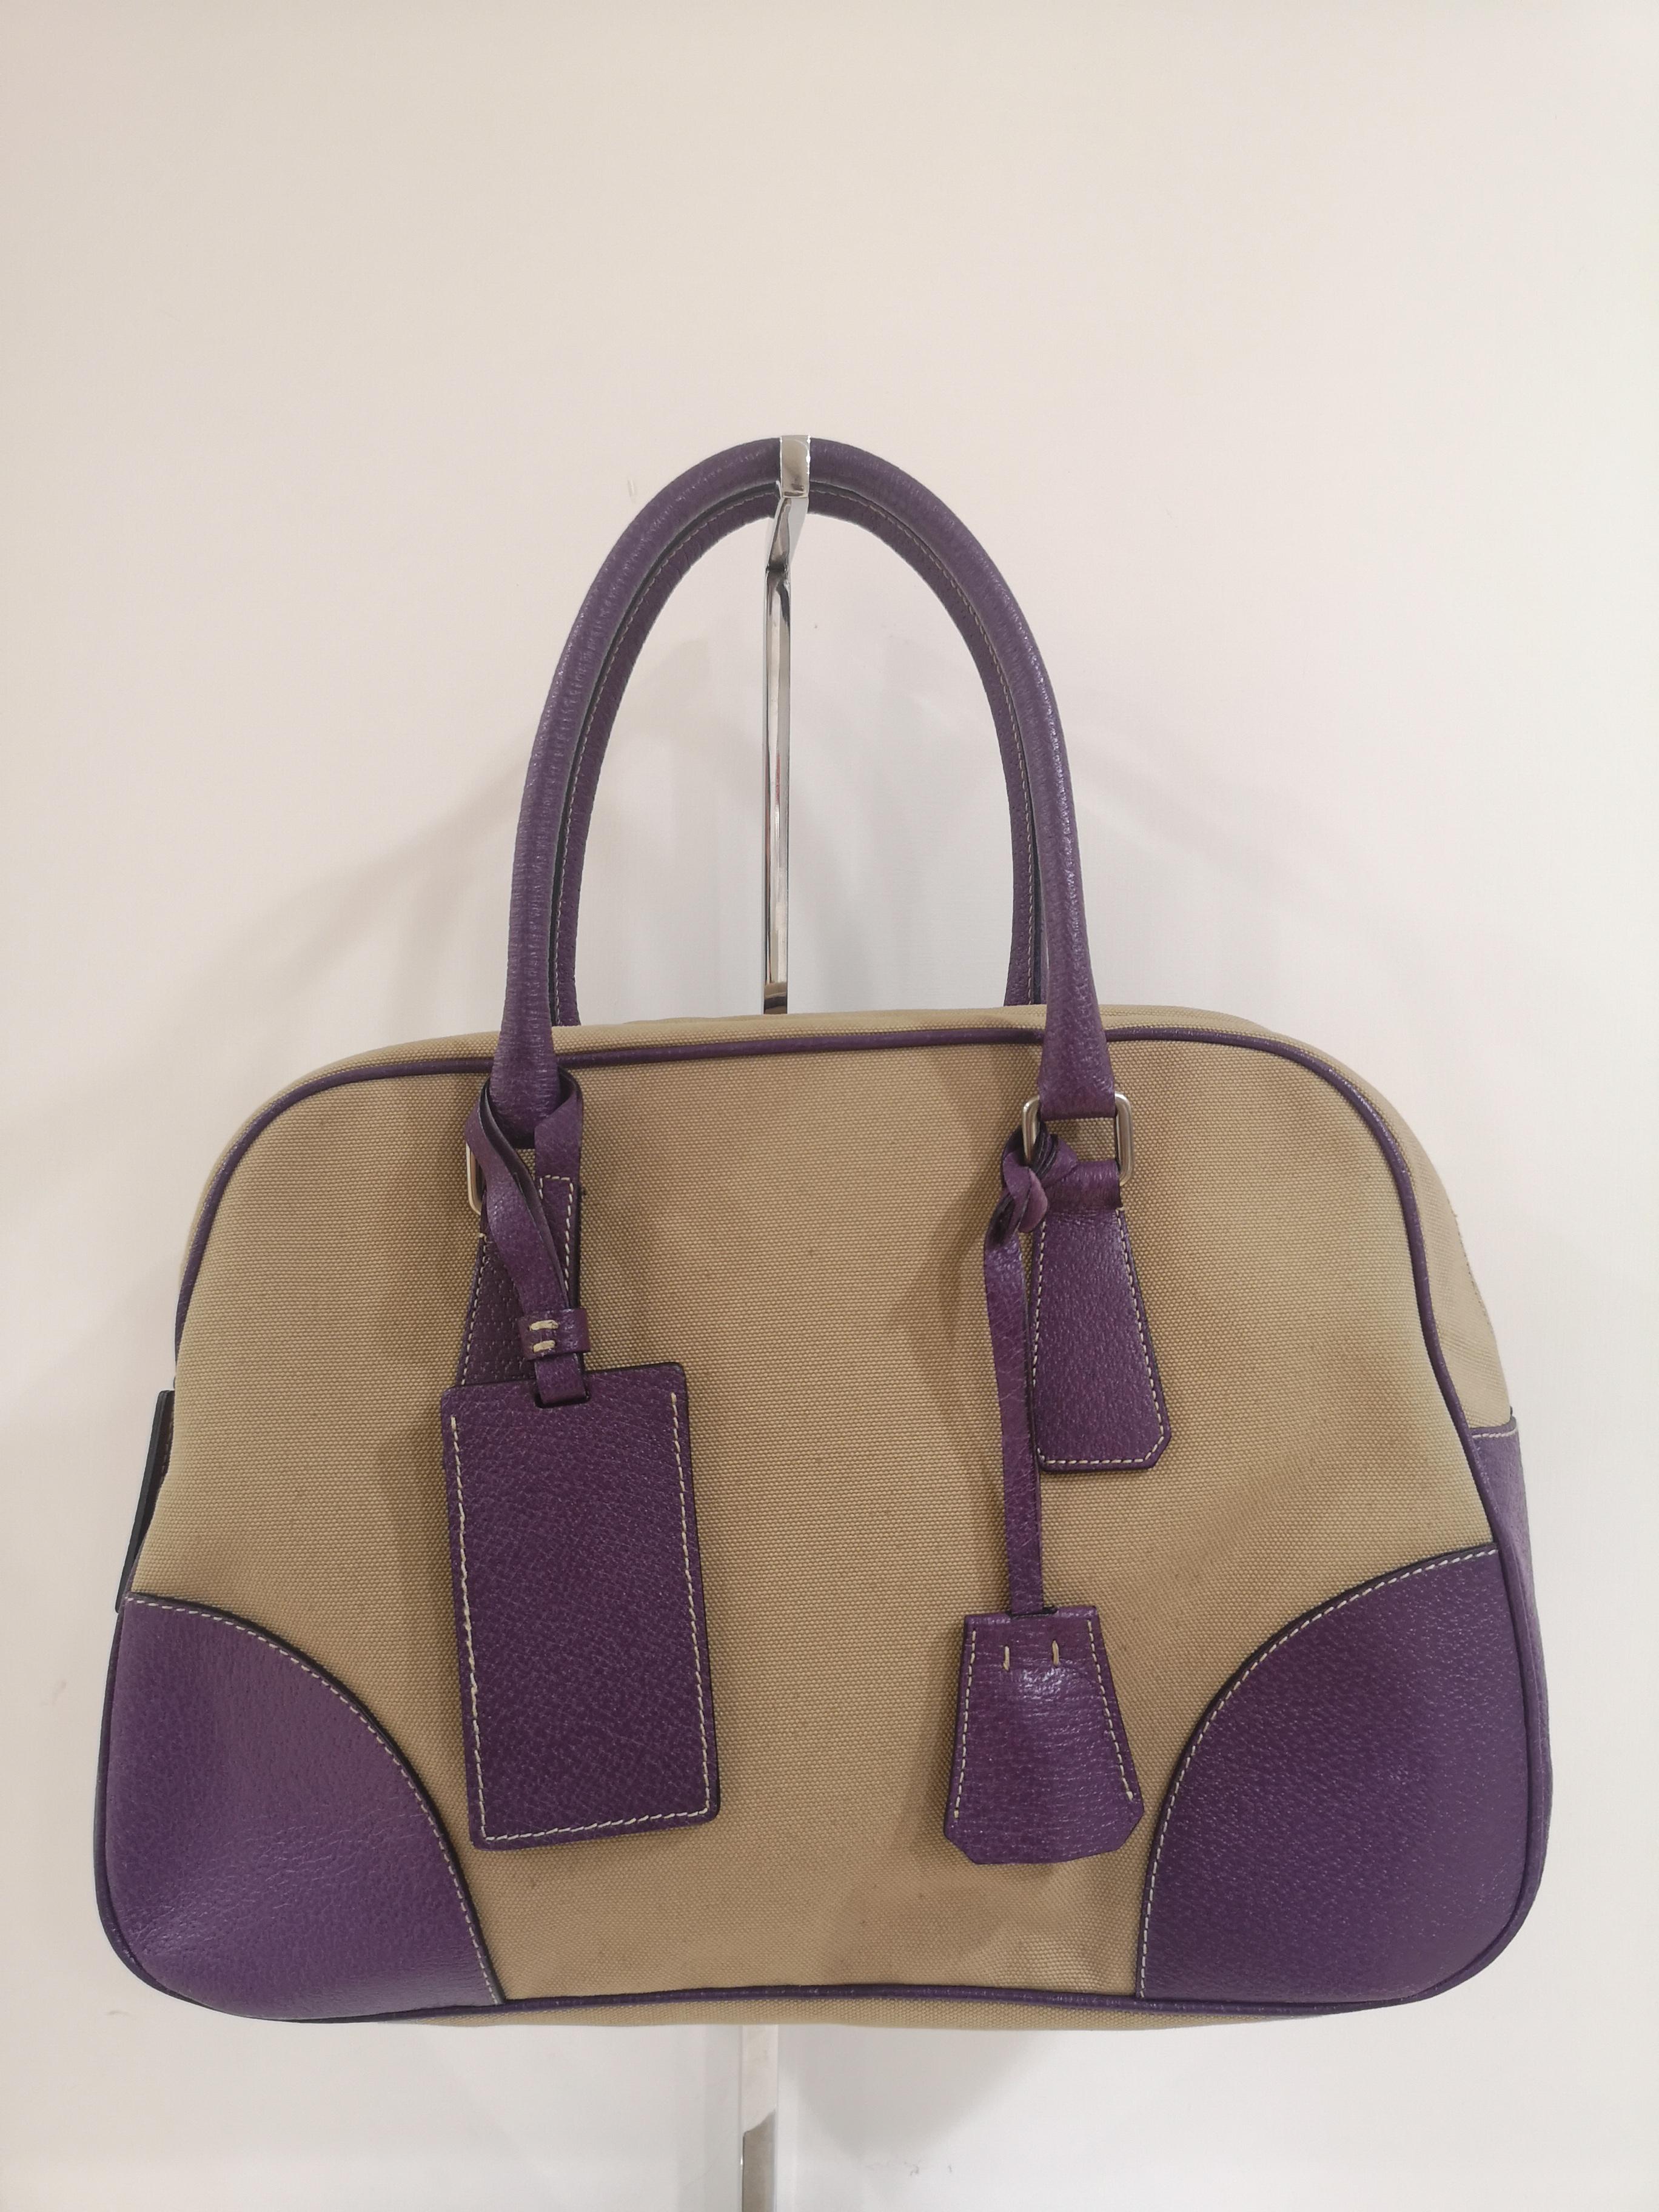 Prada beige purple handle bag / Shoulder bag
measurements: 34 * 23 cm * 15 cm depth